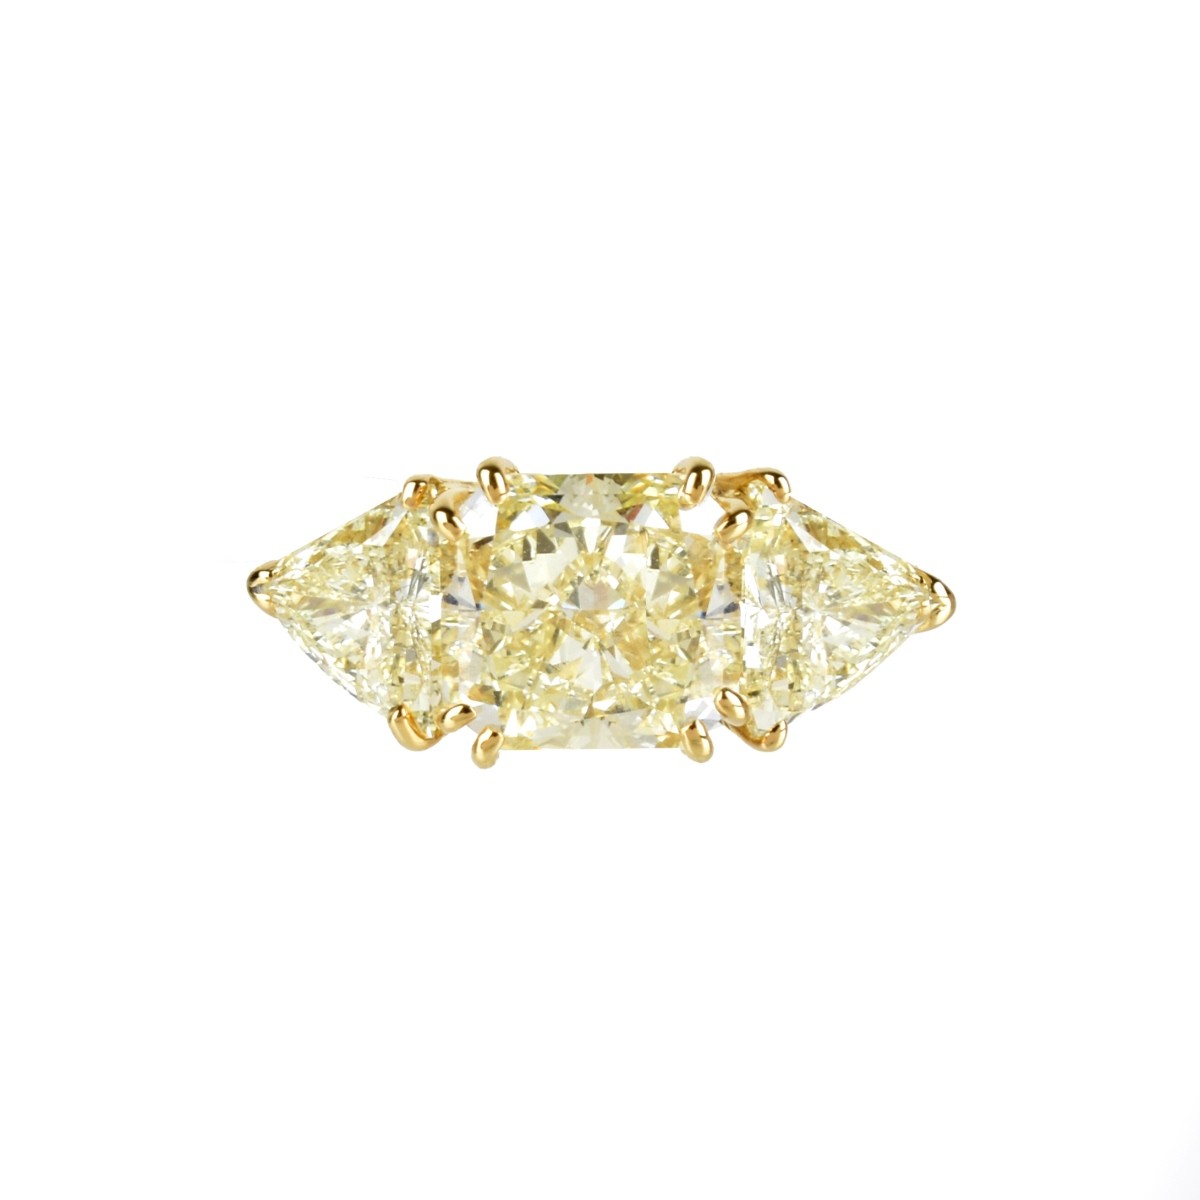 8.11ct Fancy Light Yellow Diamond Ring